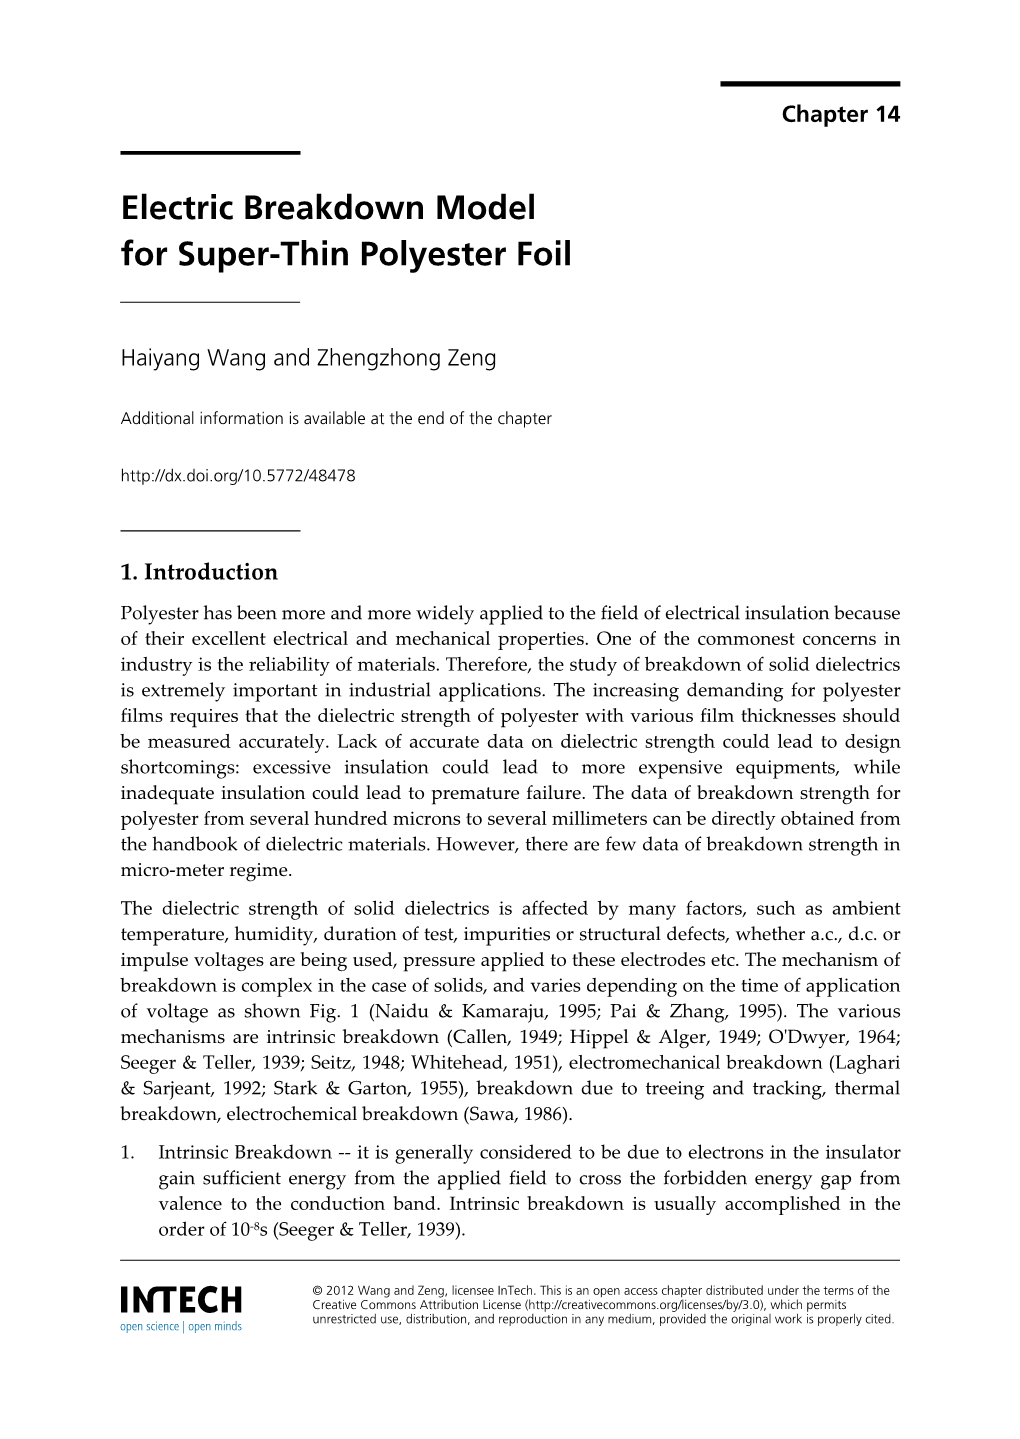 Electric Breakdown Model for Super-Thin Polyester Foil